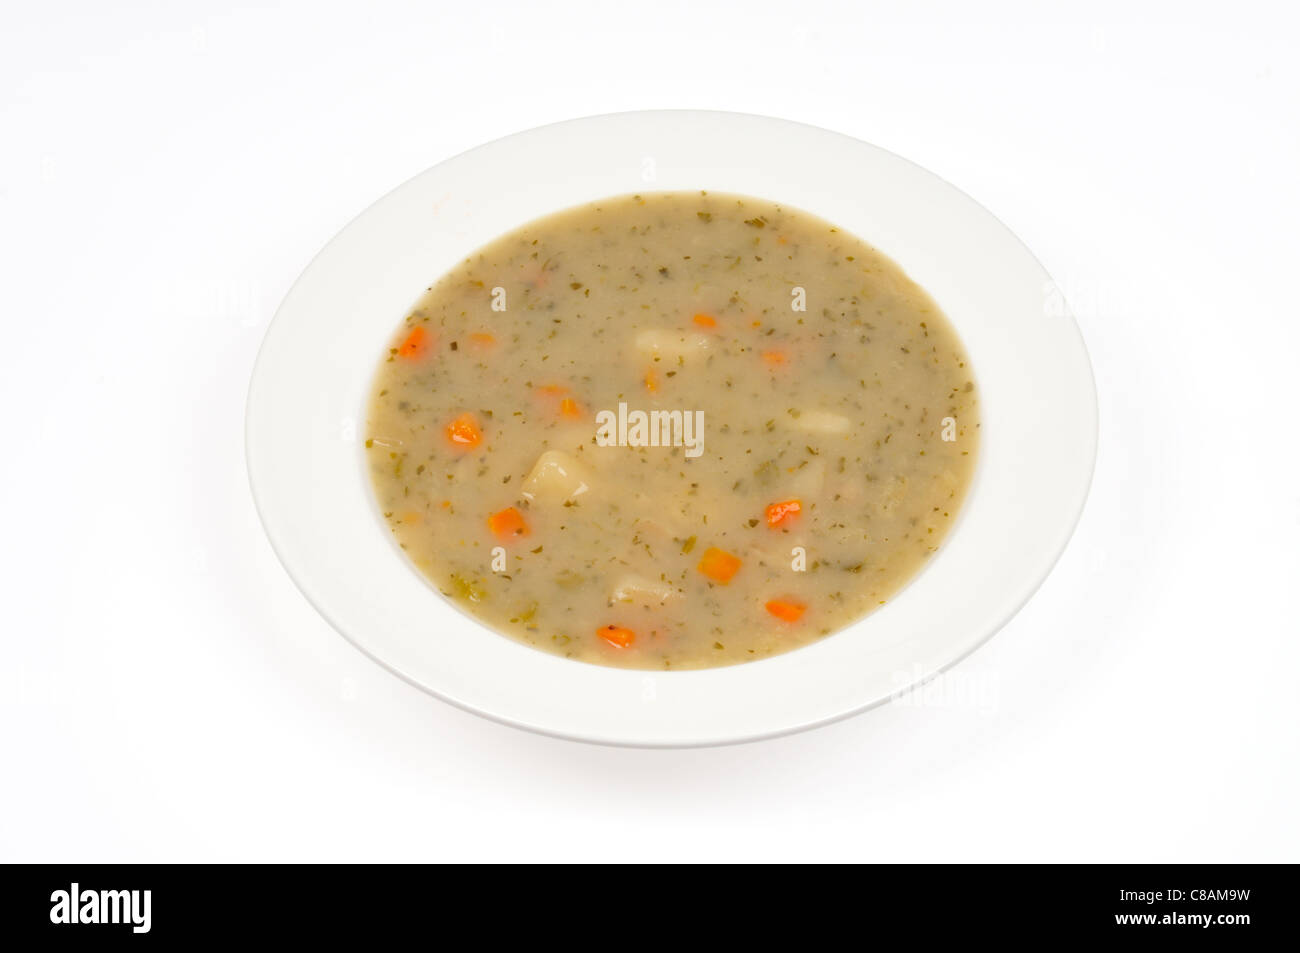 A bowl of potato and leek soup on white background cutout. Stock Photo